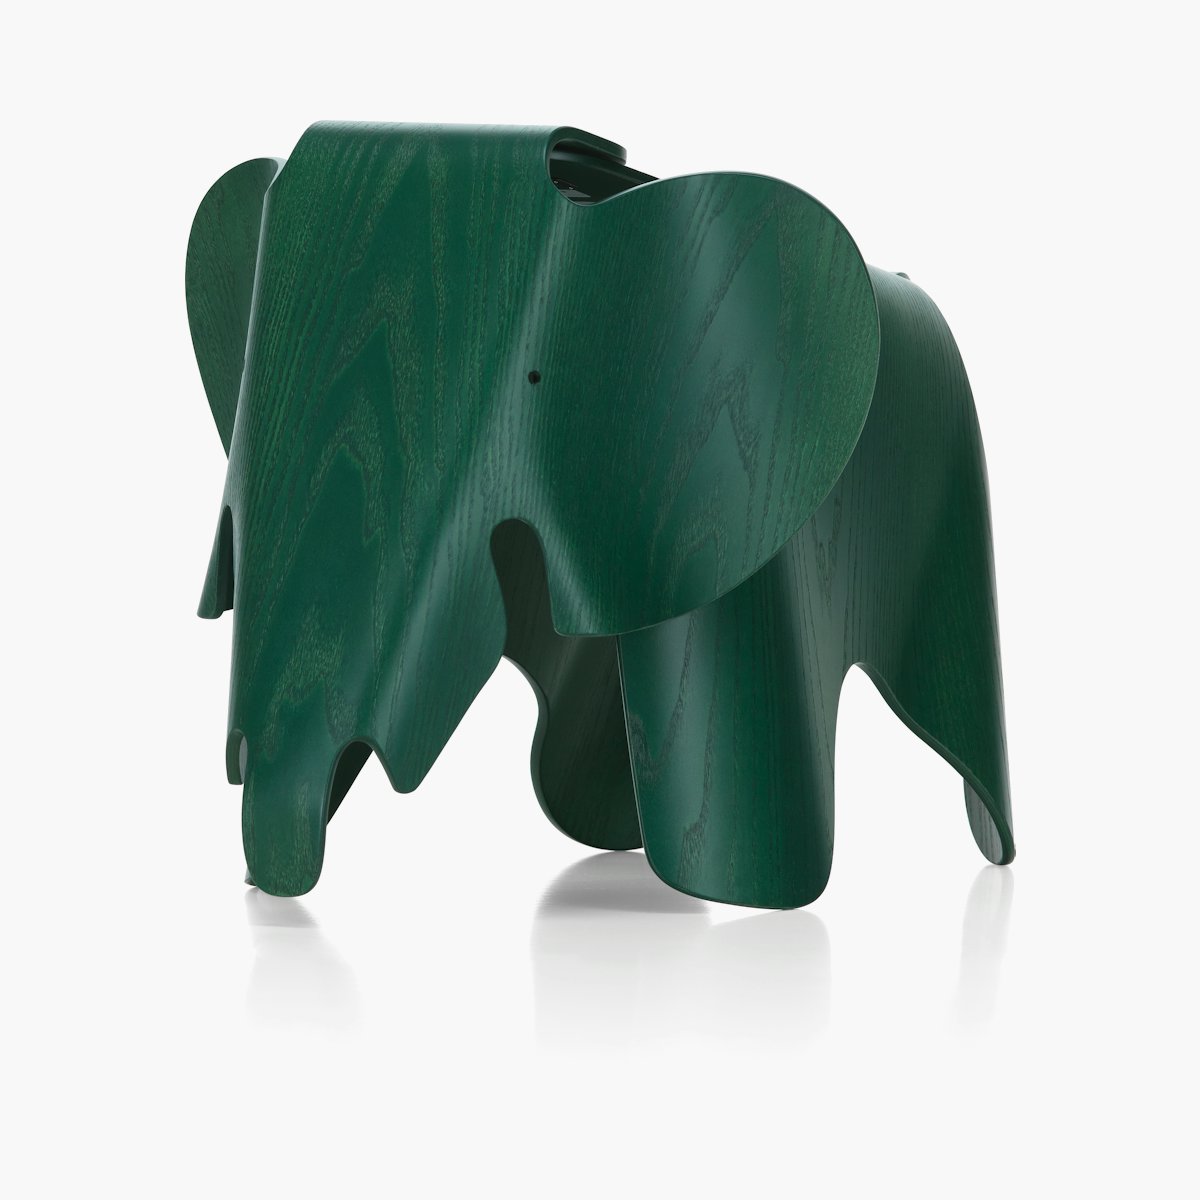 Eames Elephant - Limited-Edition